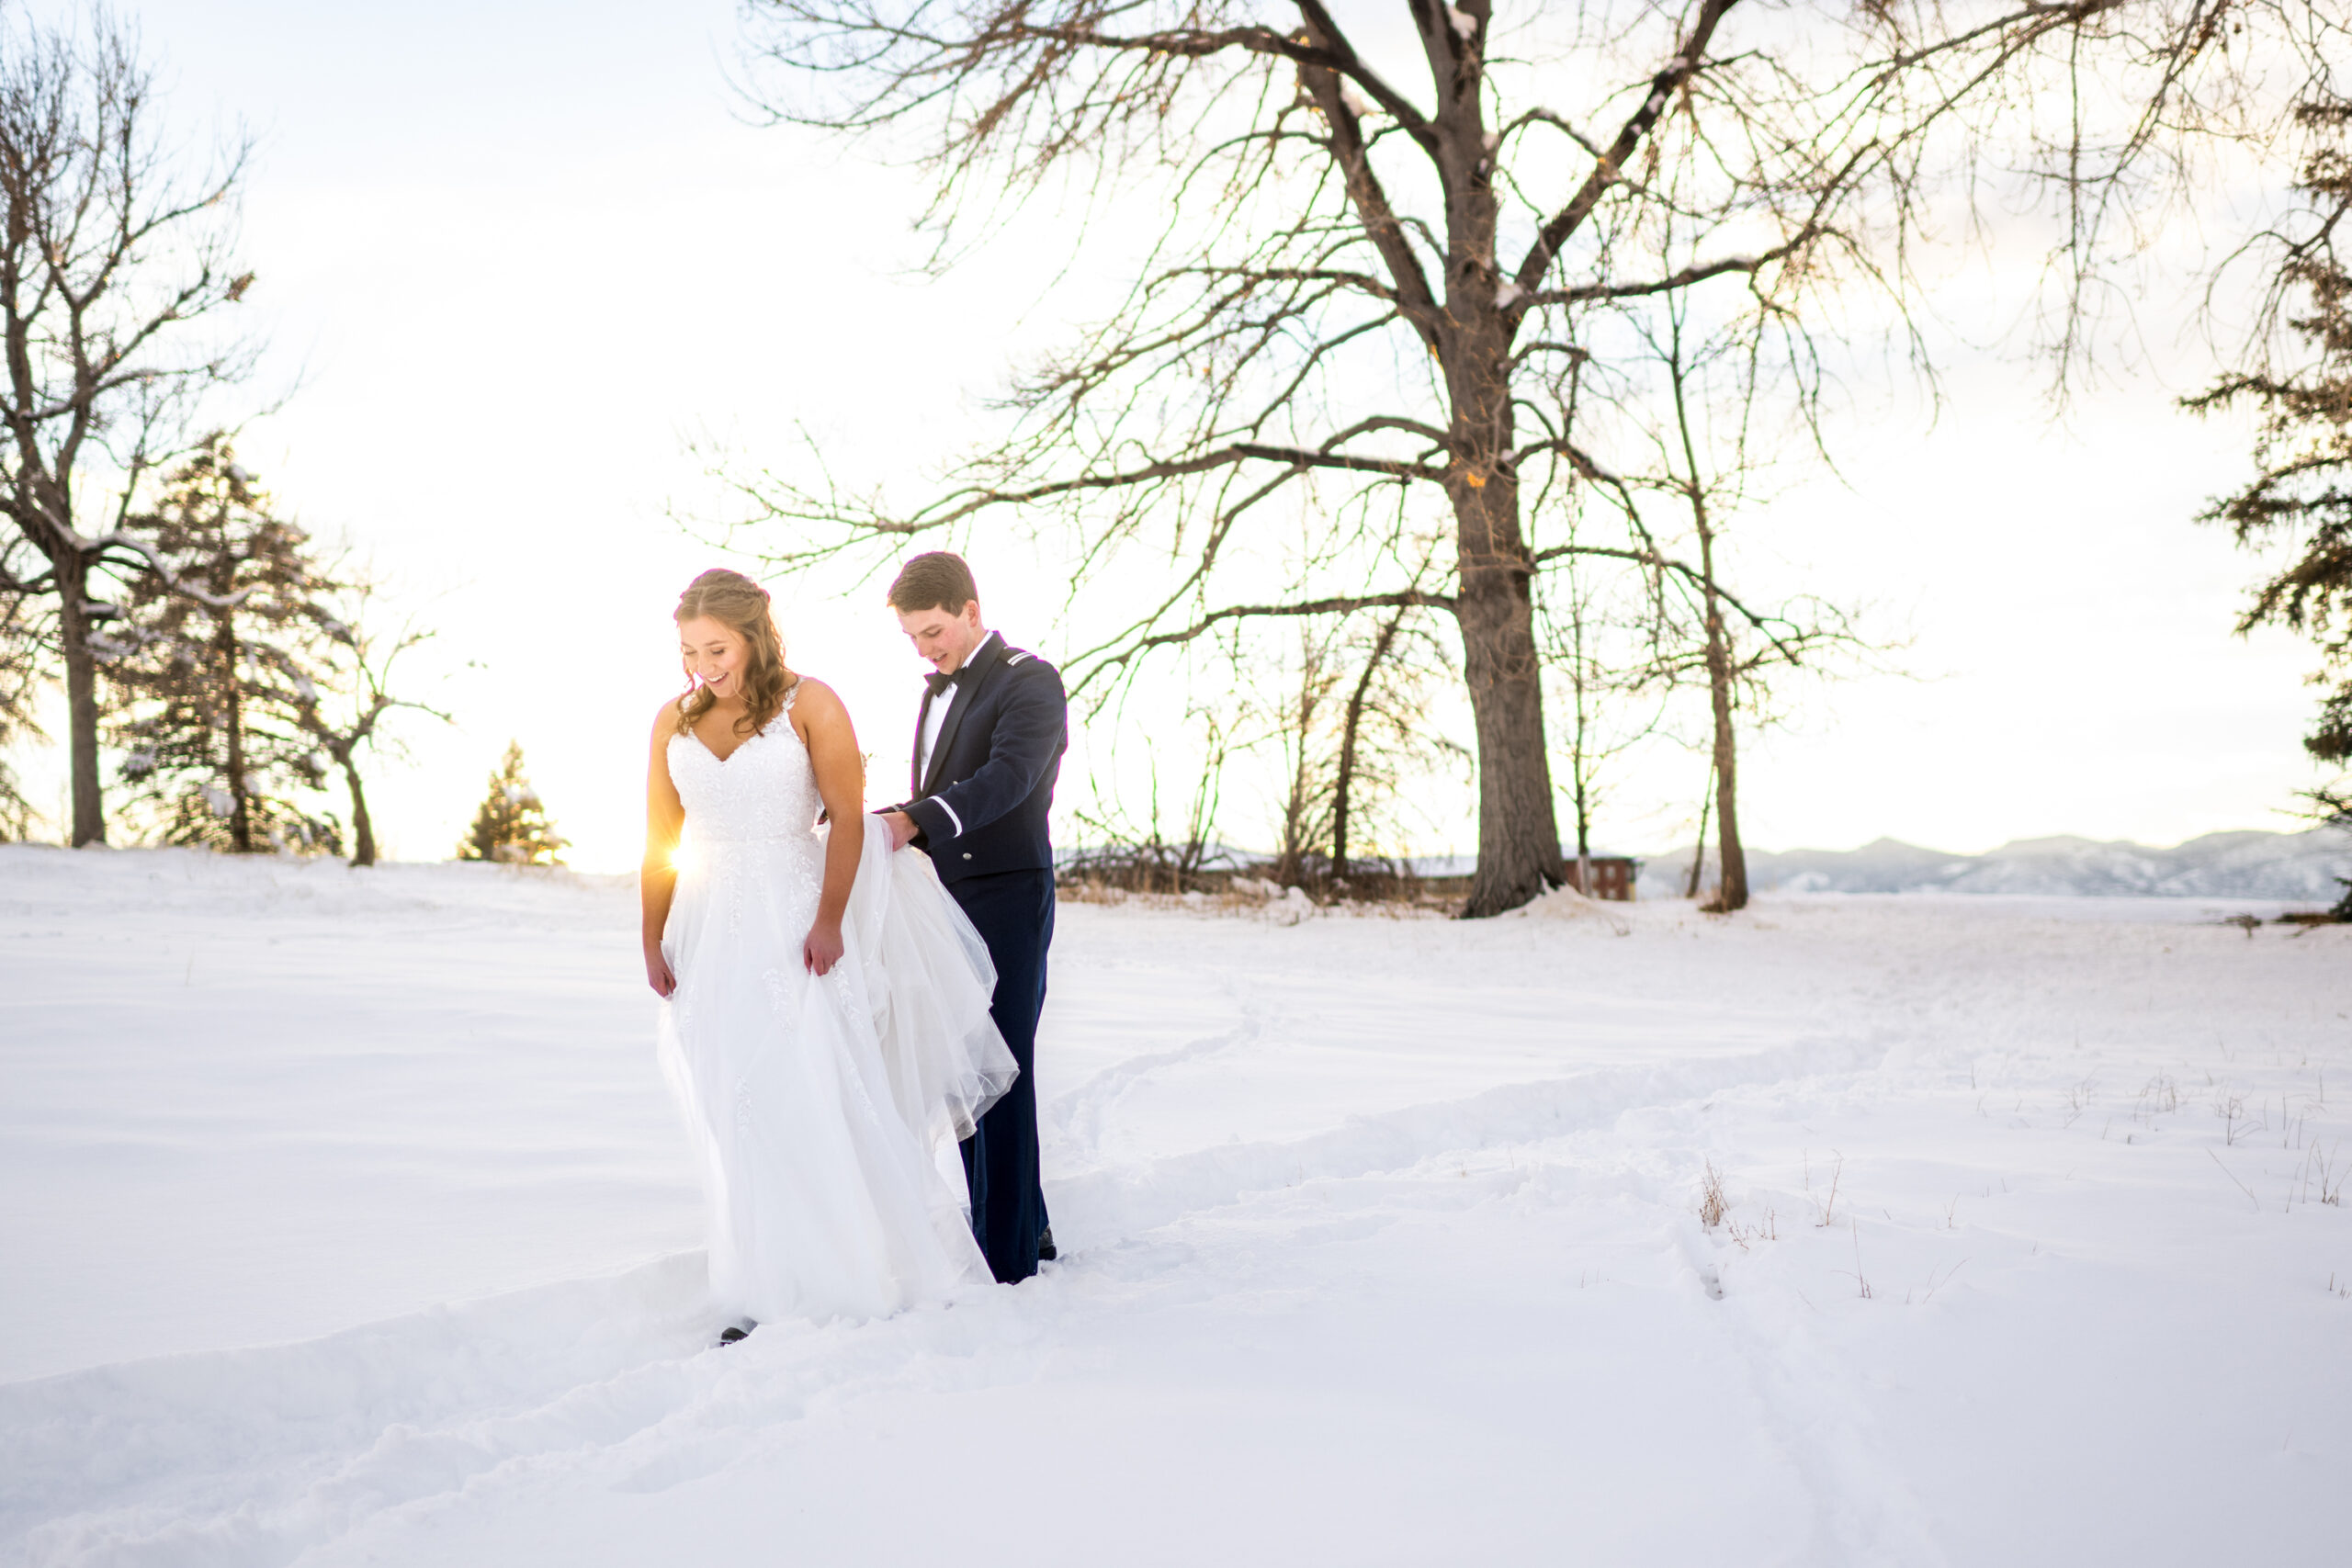 The bride and groom walk in freshly fallen snow at Fly'n B Park in Littleton, Colorado, during their wedding at Ashley Ridge by Wedgewood Weddings.